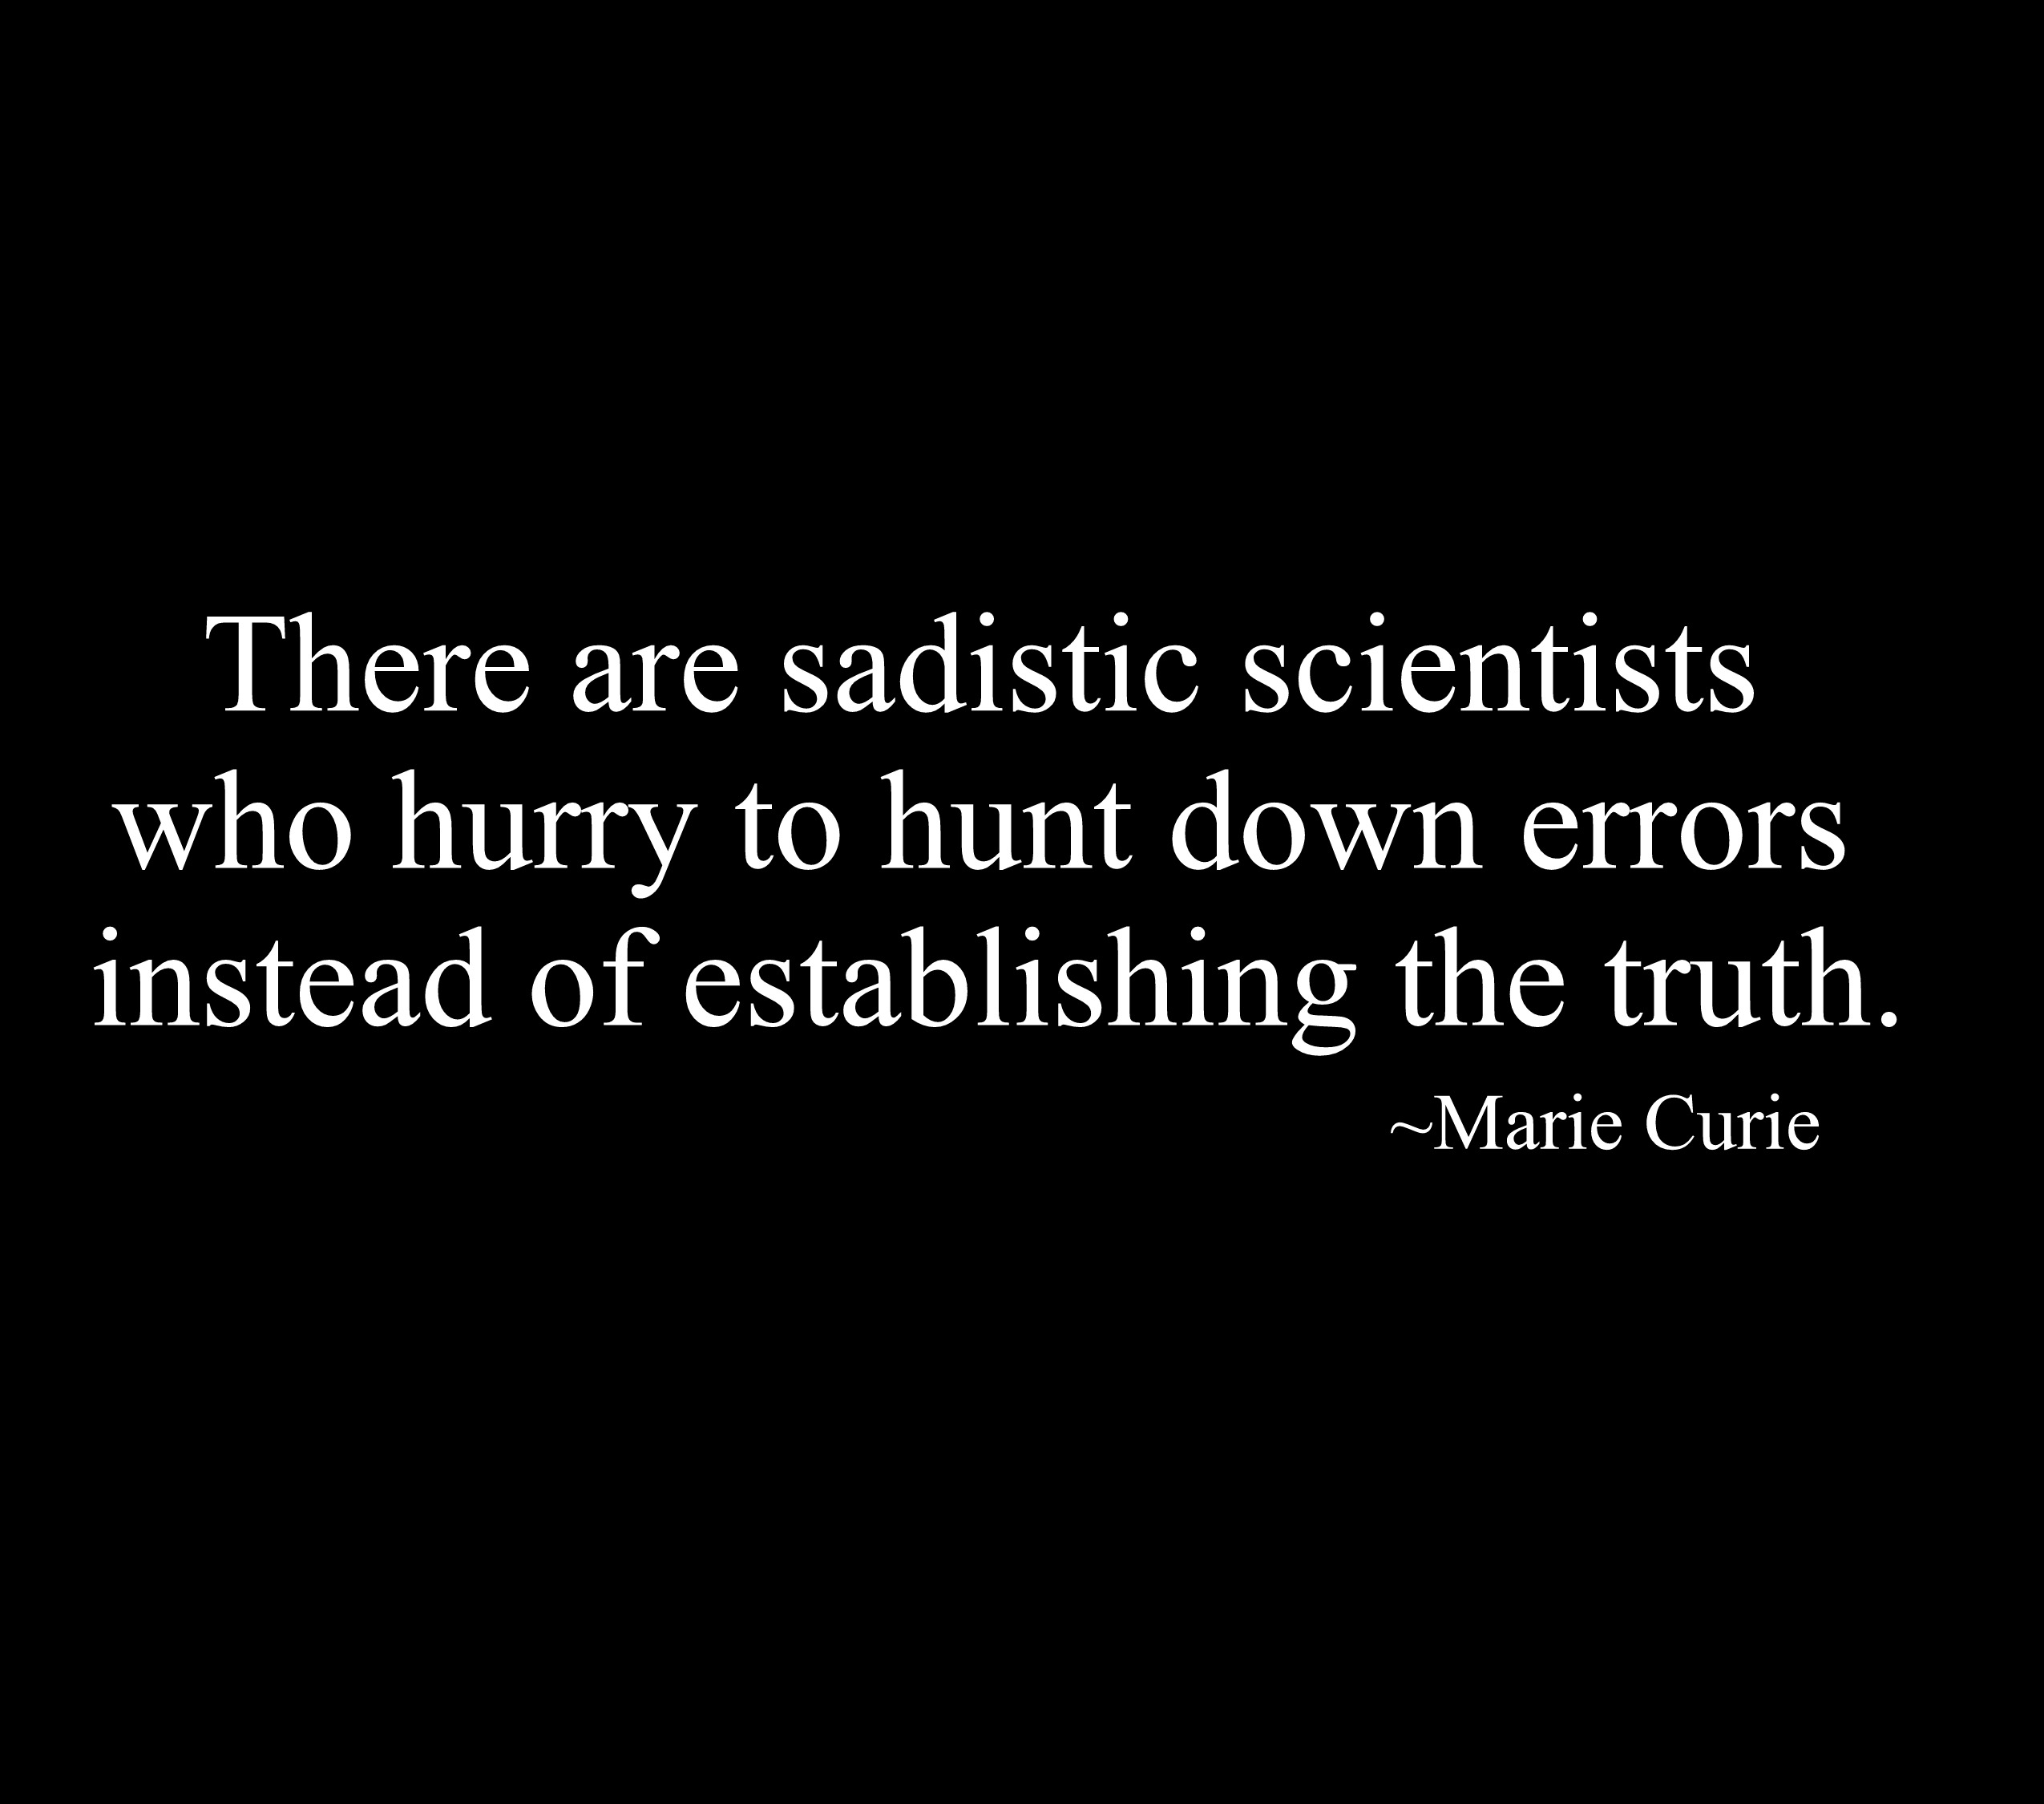 quotes, Marie Curie - desktop wallpaper